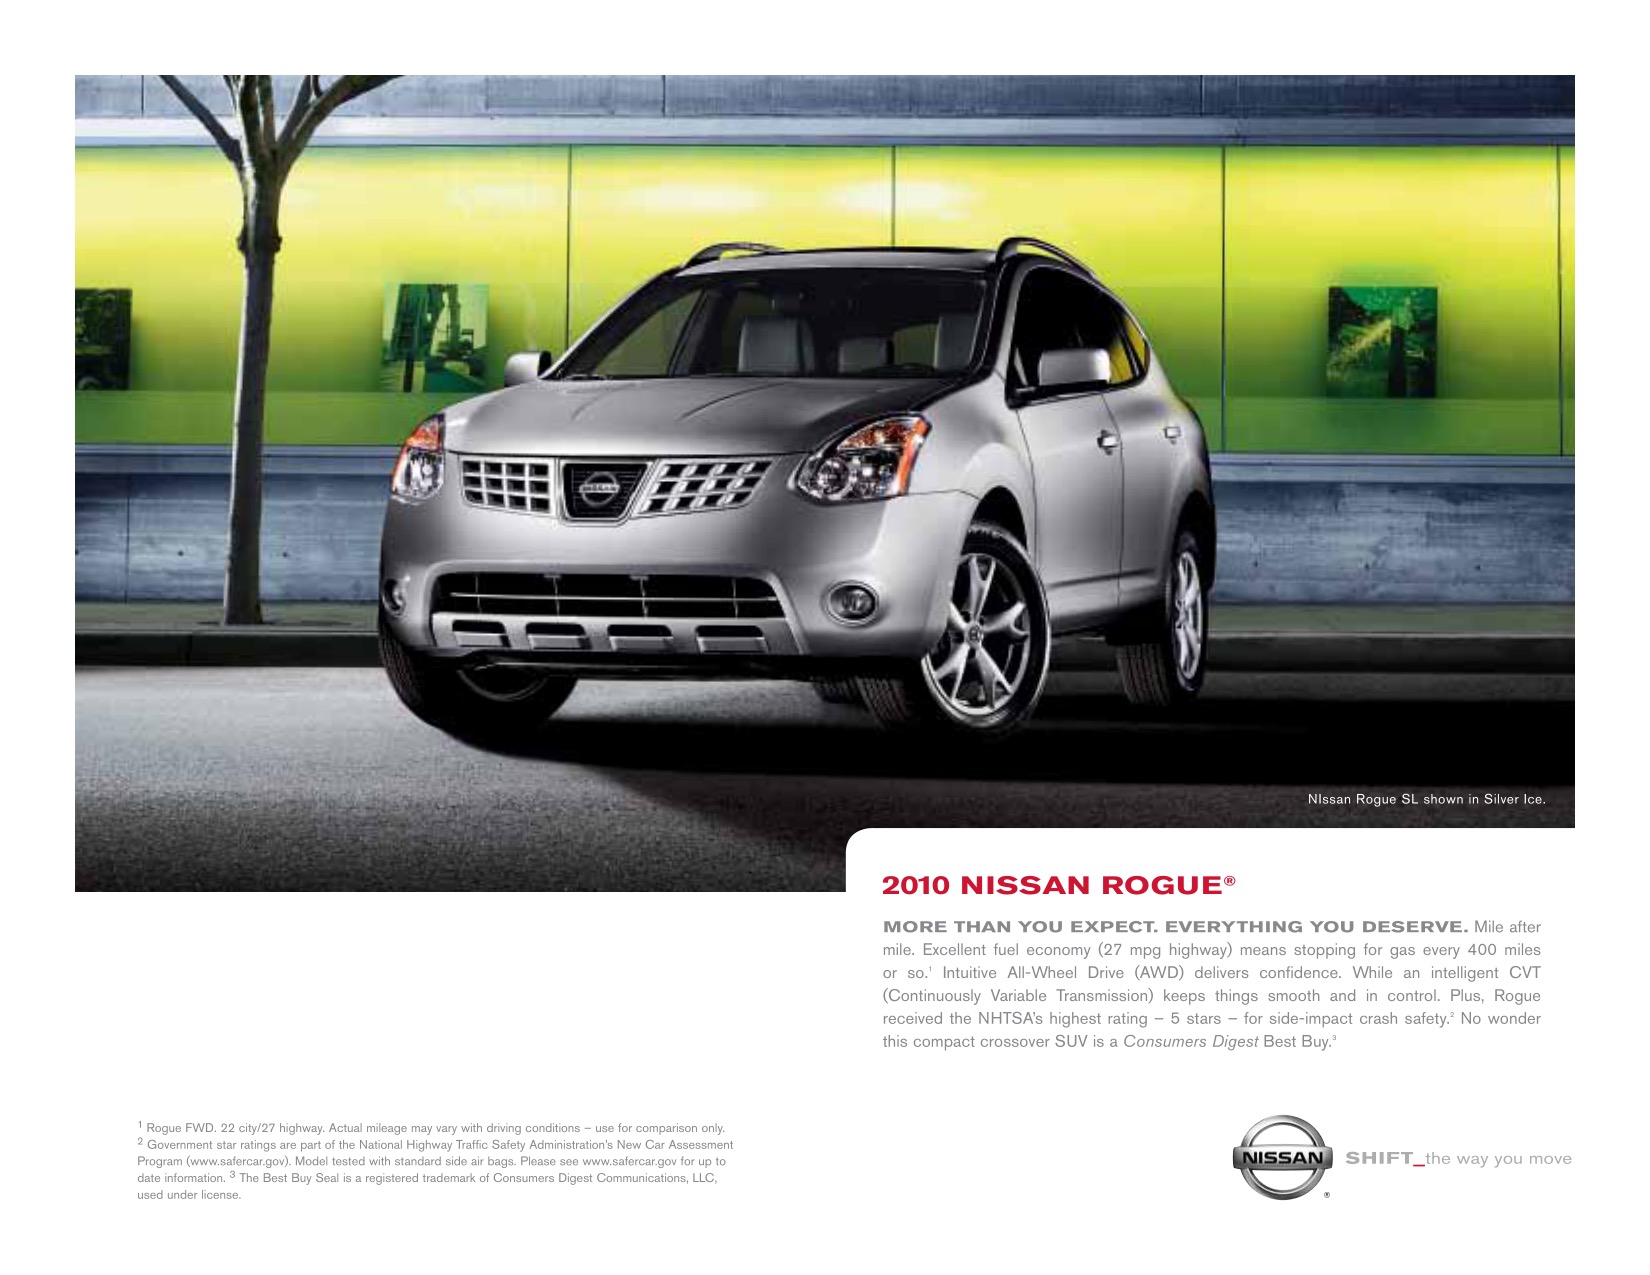 2010 Nissan Rogue Brochure